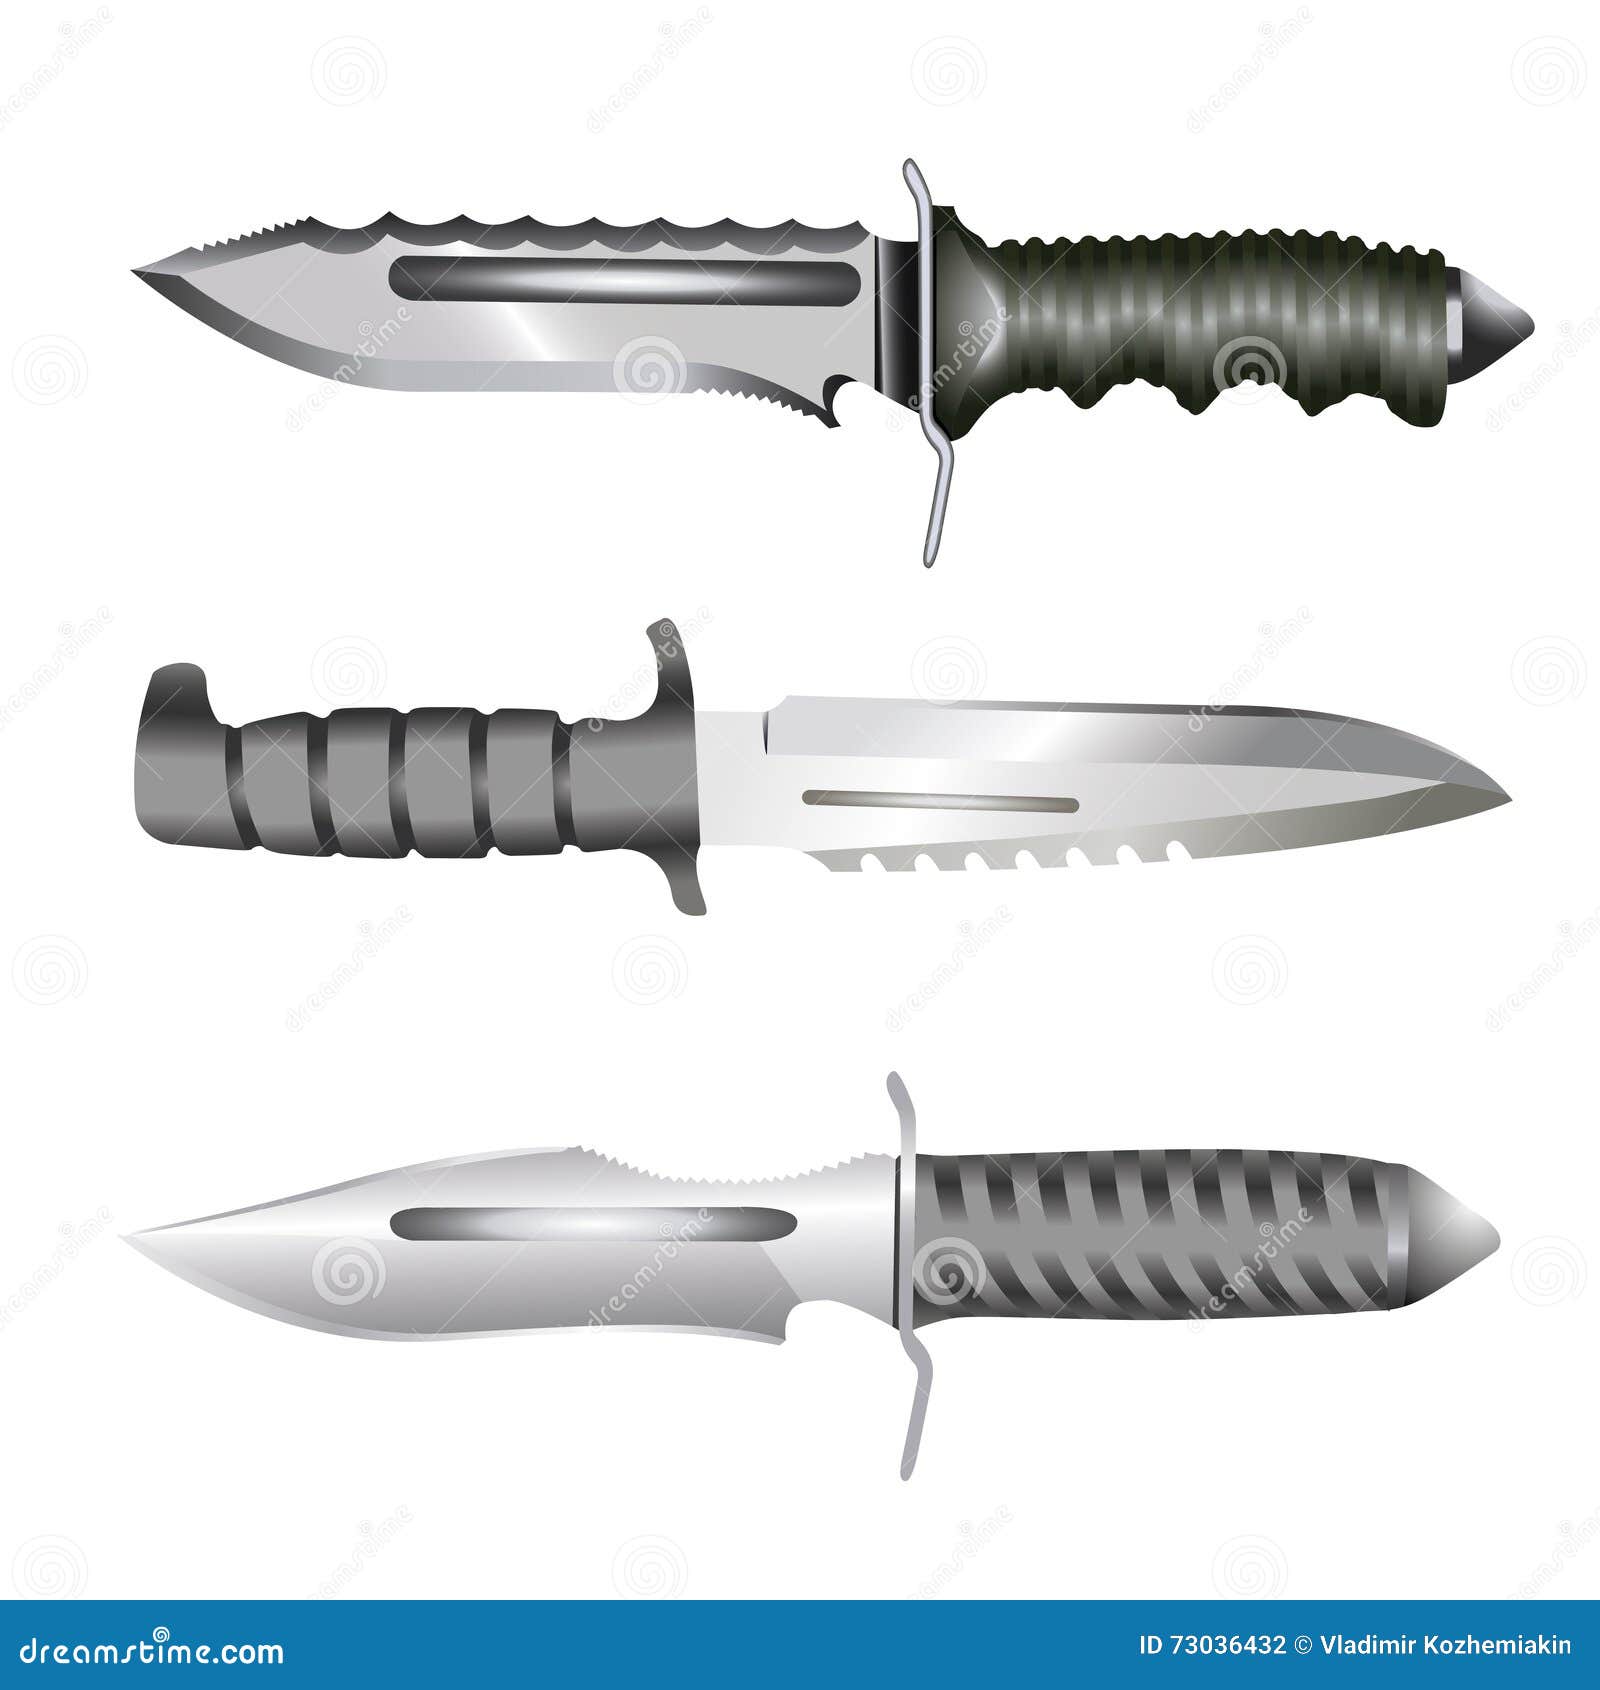 Knife stock vector. Illustration of knife, military, stab - 73036432